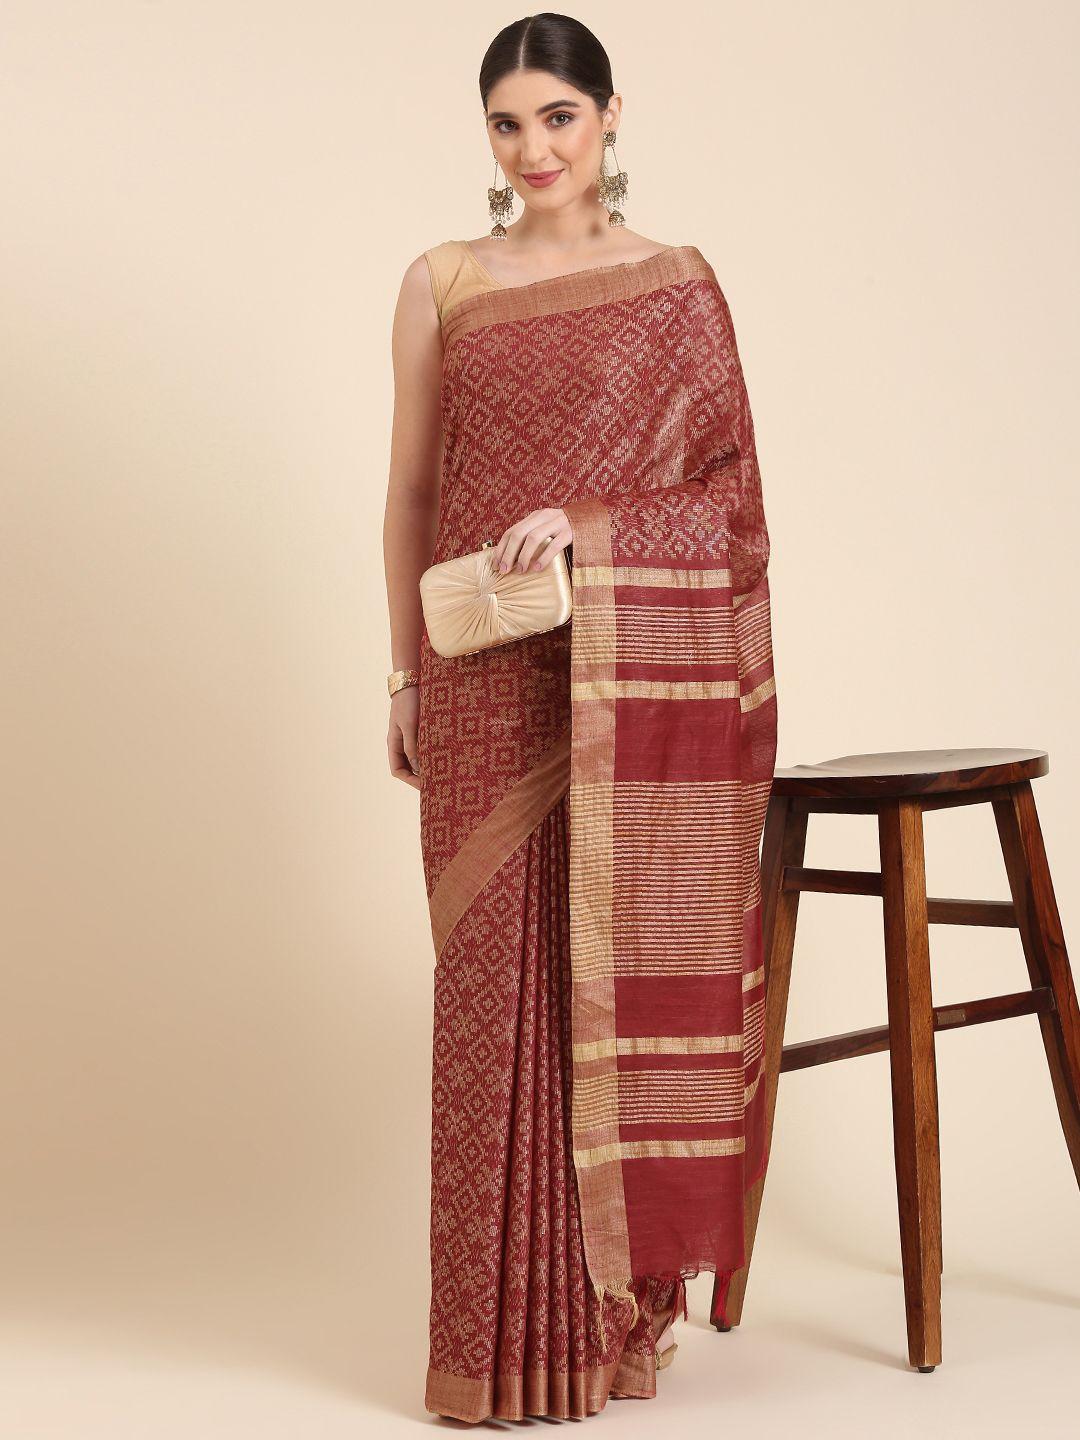 swatika-woven-design-ethnic-motifs-bhagalpuri-saree